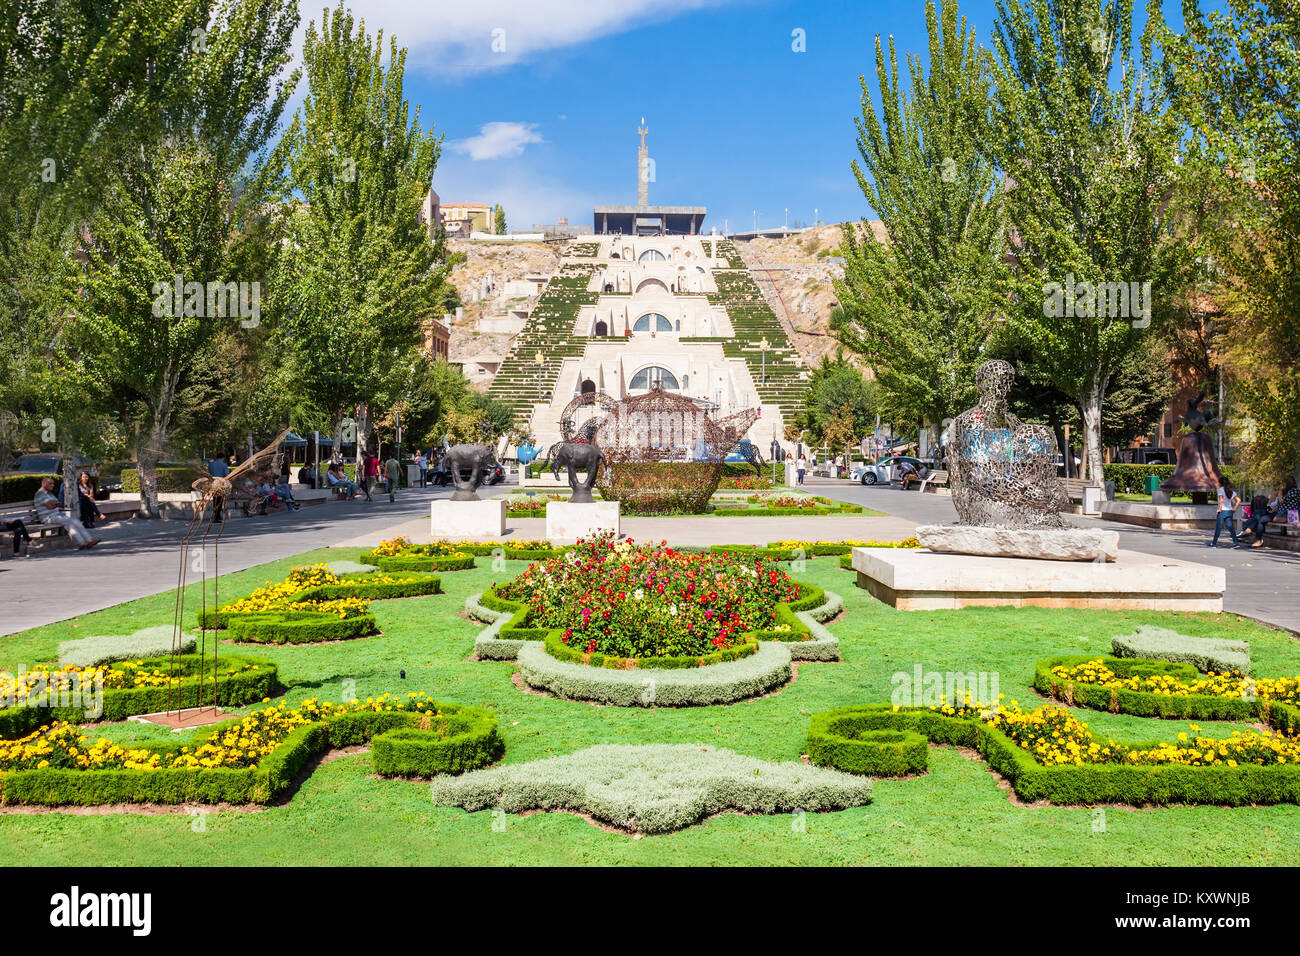 YEREVAN, Armenien - 28. SEPTEMBER 2015: Die Kaskade ist ein riesiges Treppenhaus in Eriwan, Armenien. Stockfoto